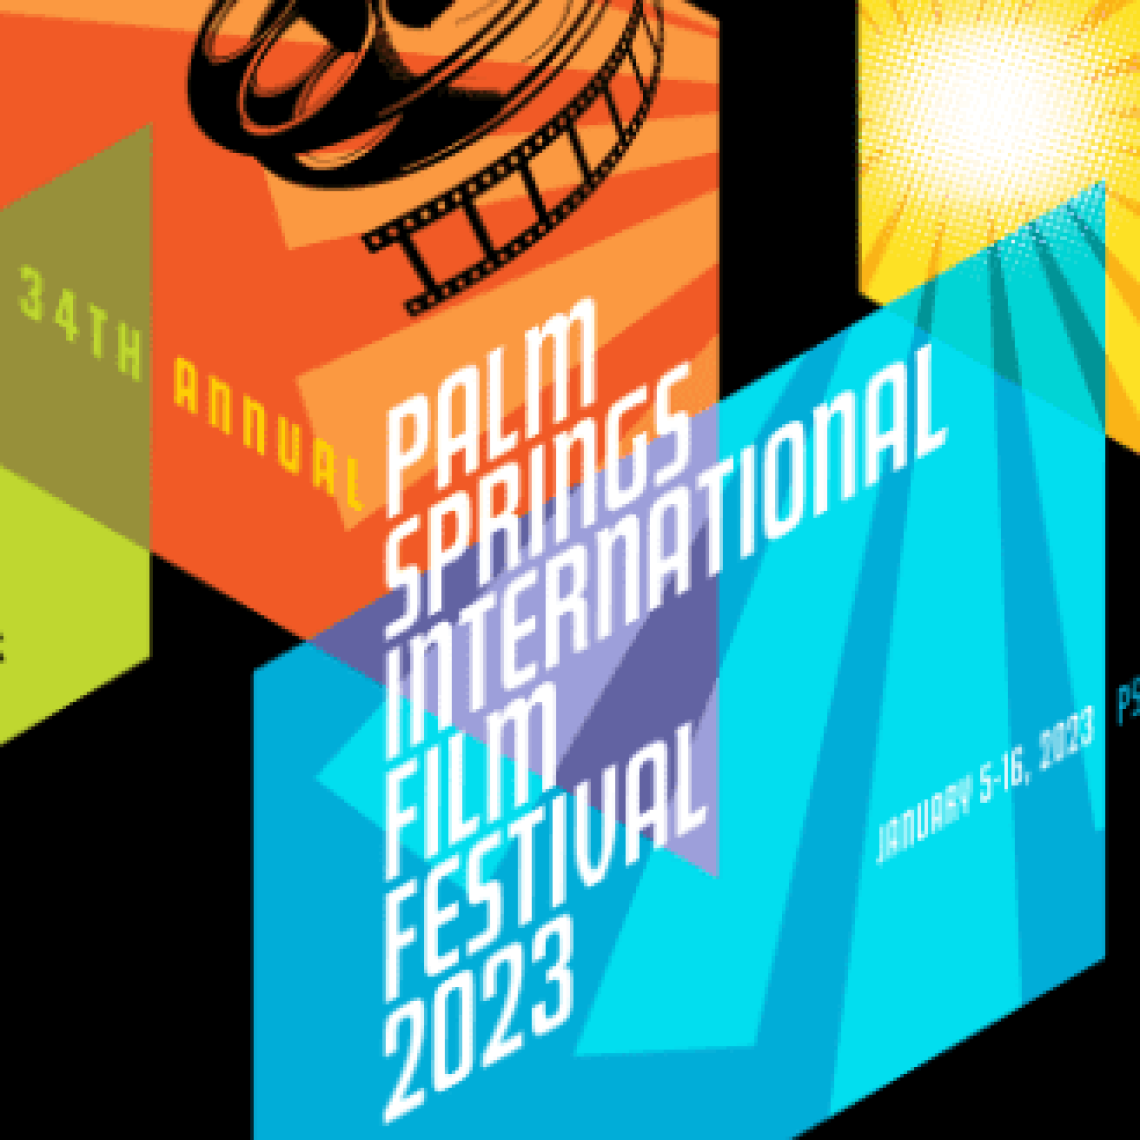 Palm Springs Film Festival 2023